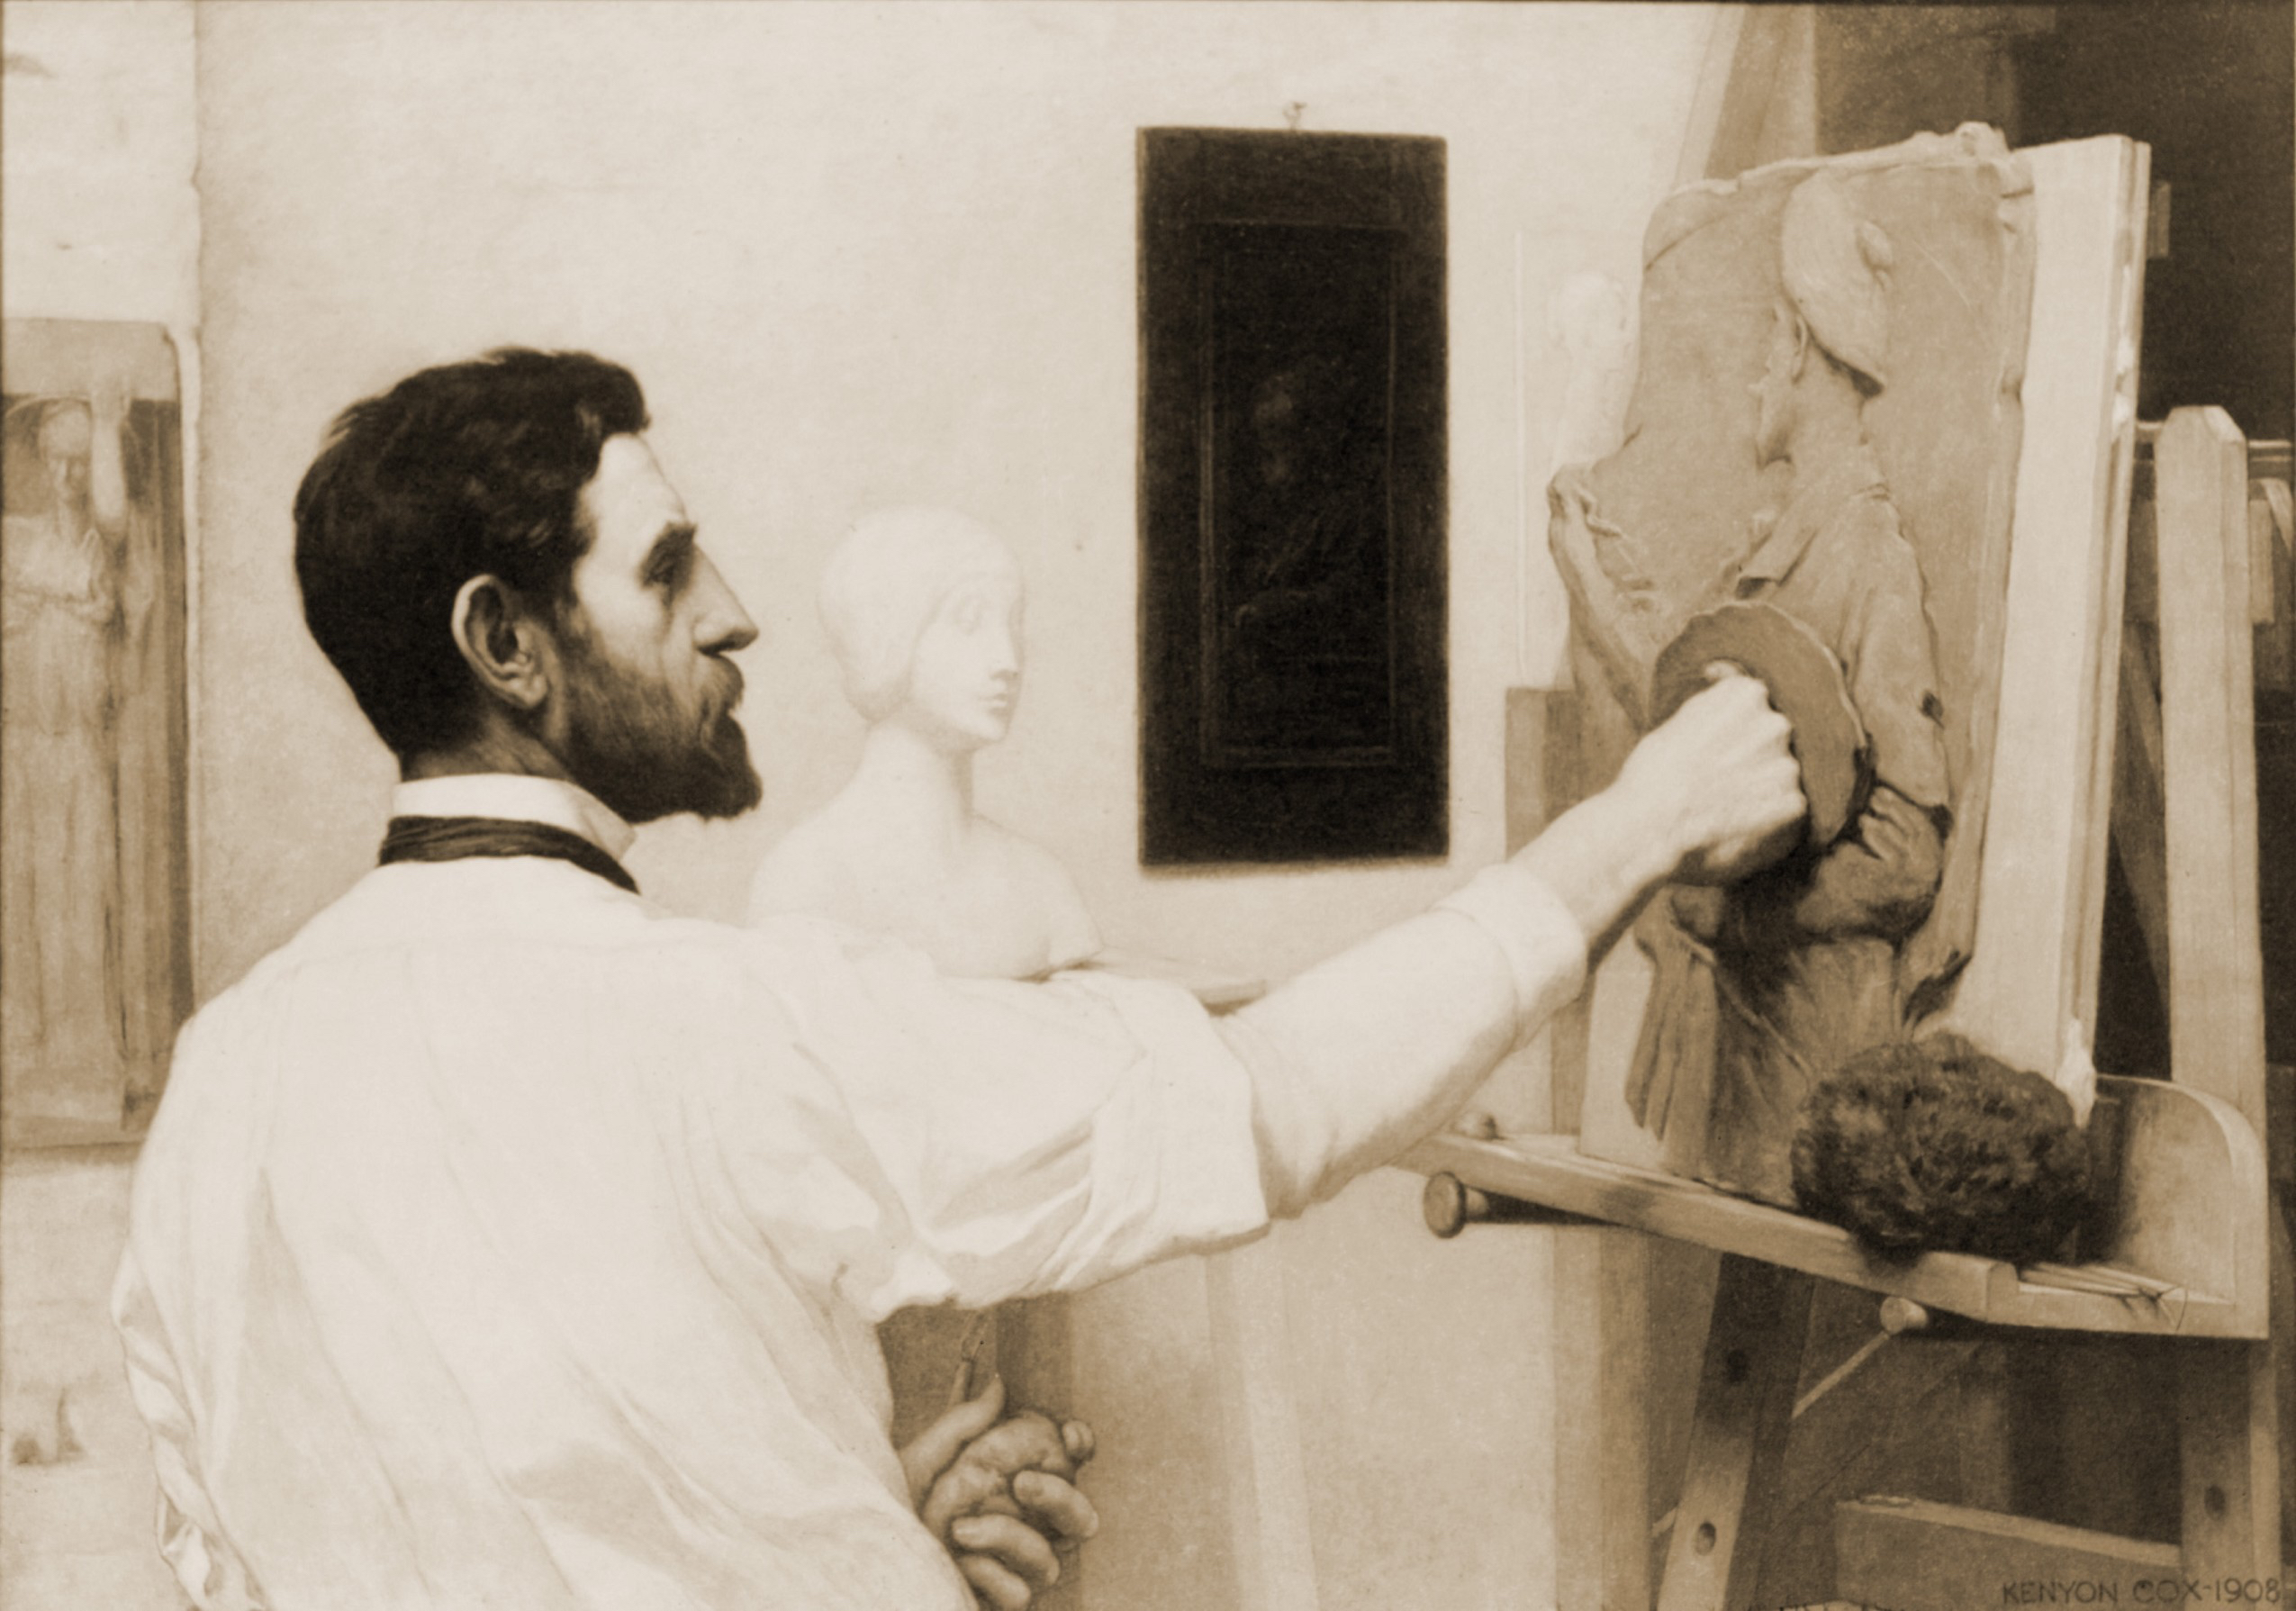 American Sculptor Augustus Saint-Gaudens